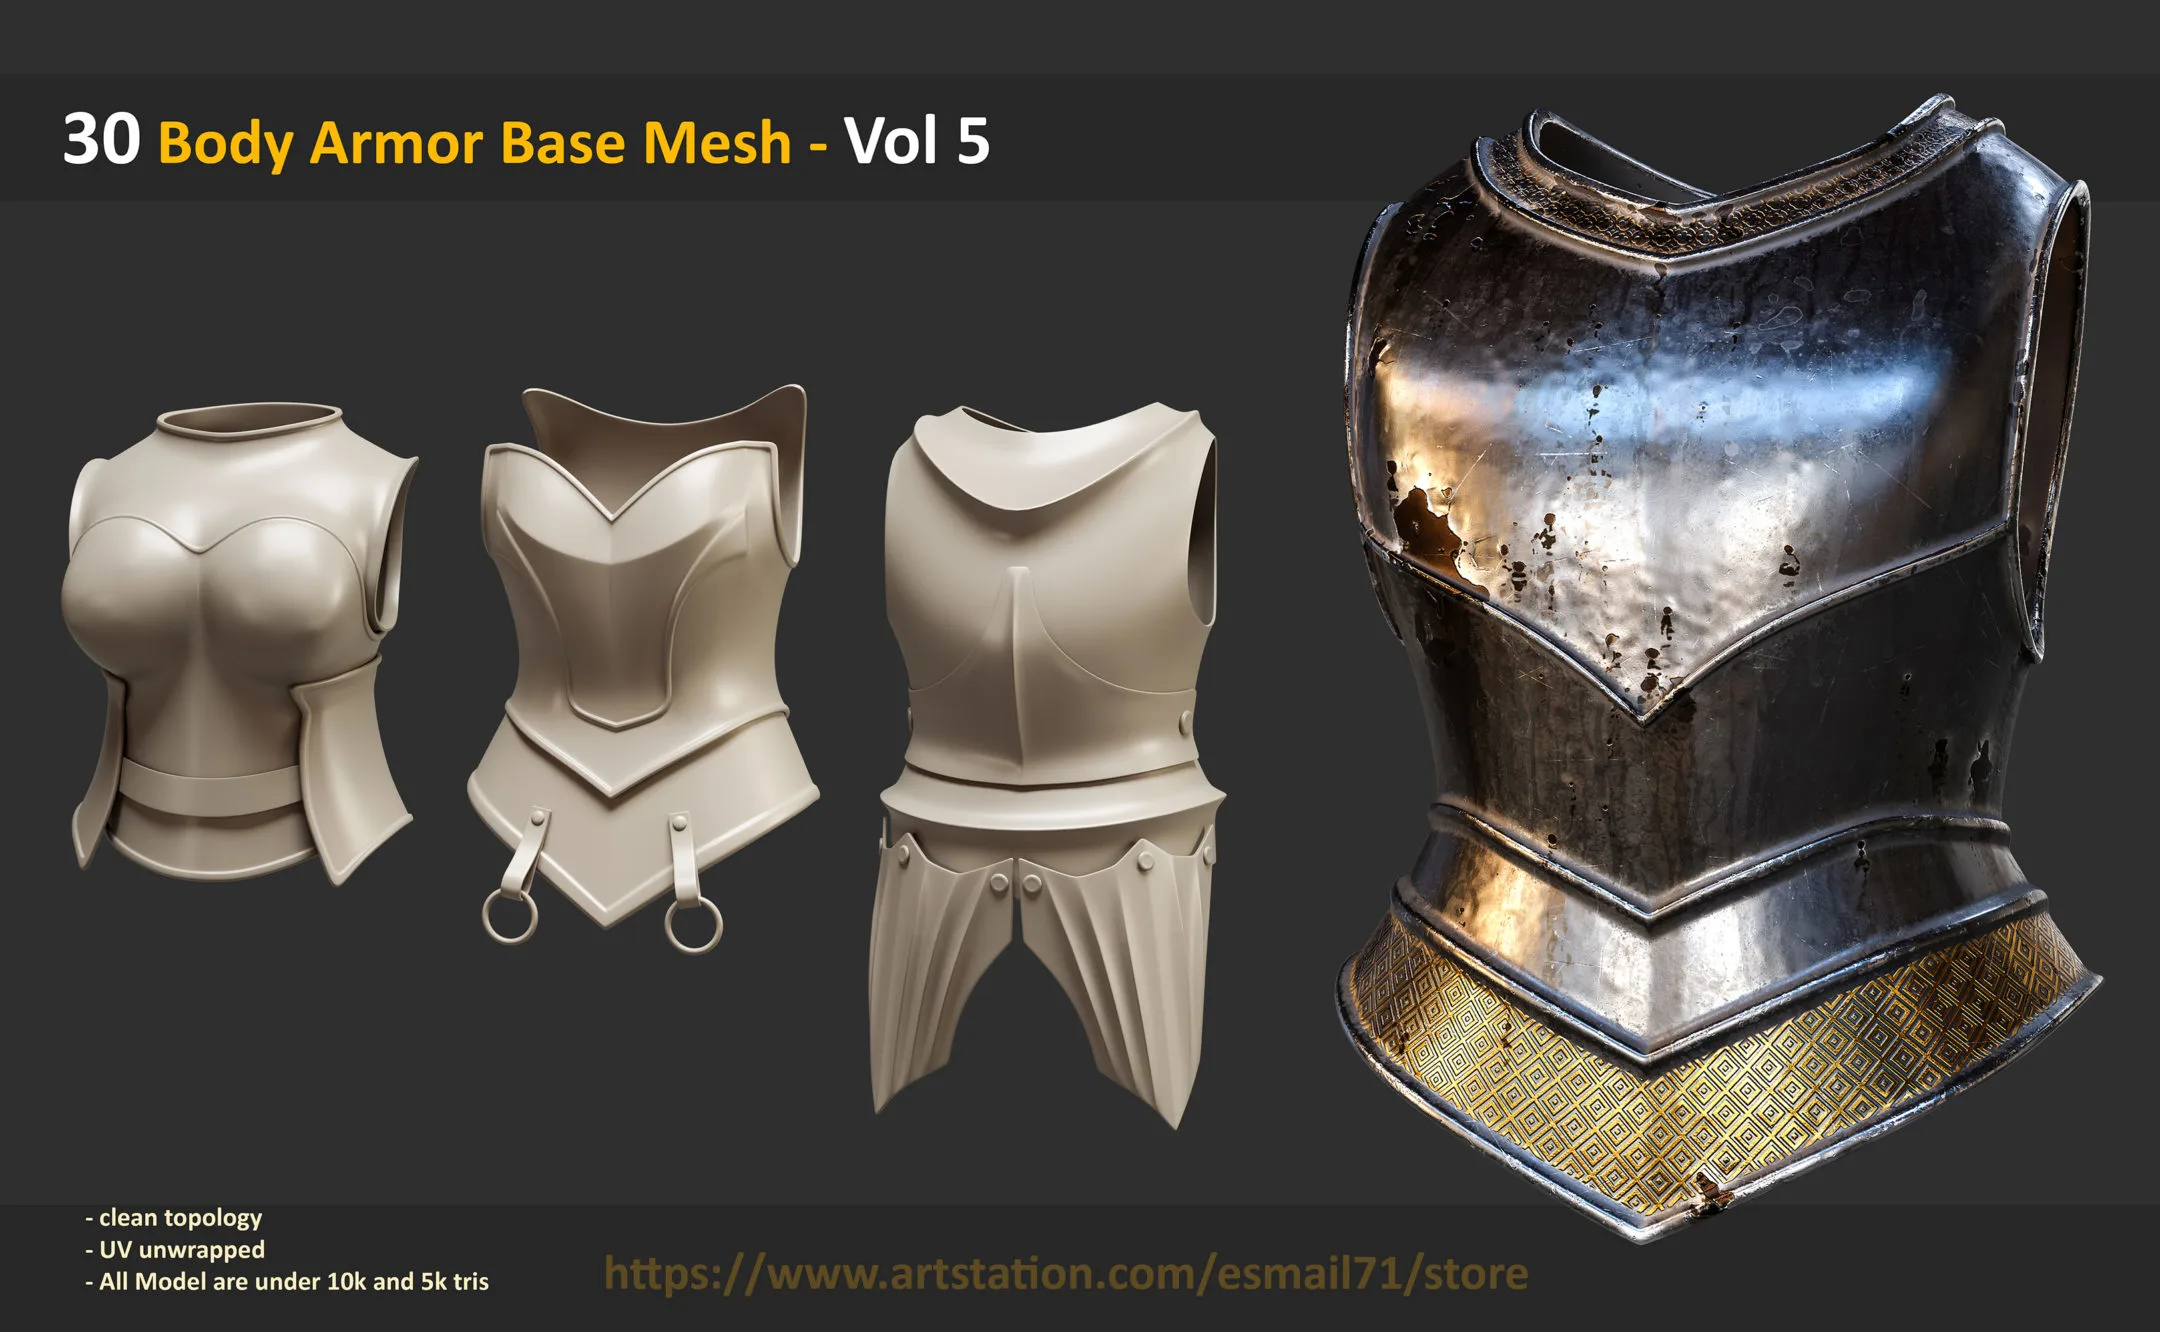 30 Body Armor Base Mesh - Vol 5